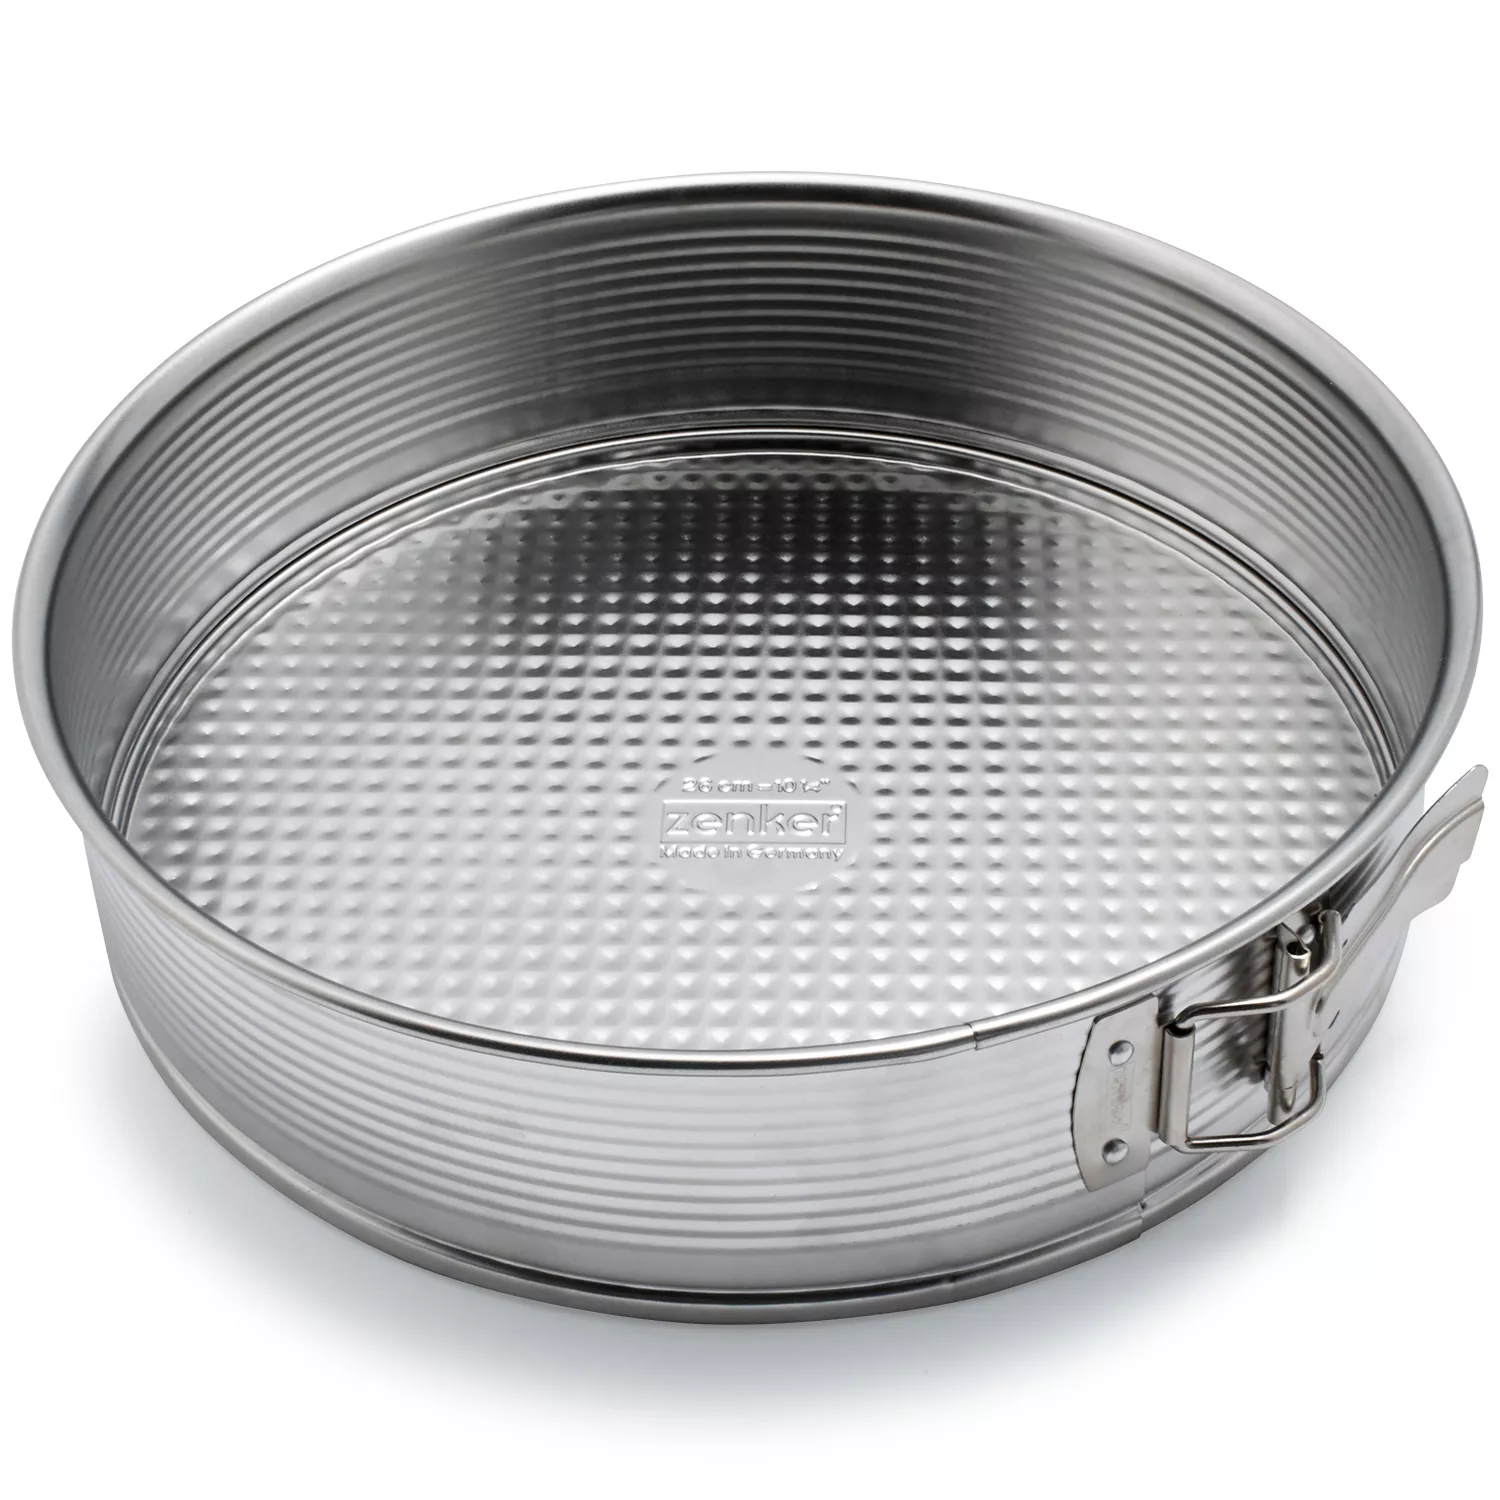 Recycled stainless steel springform pan, Ø 20 cm